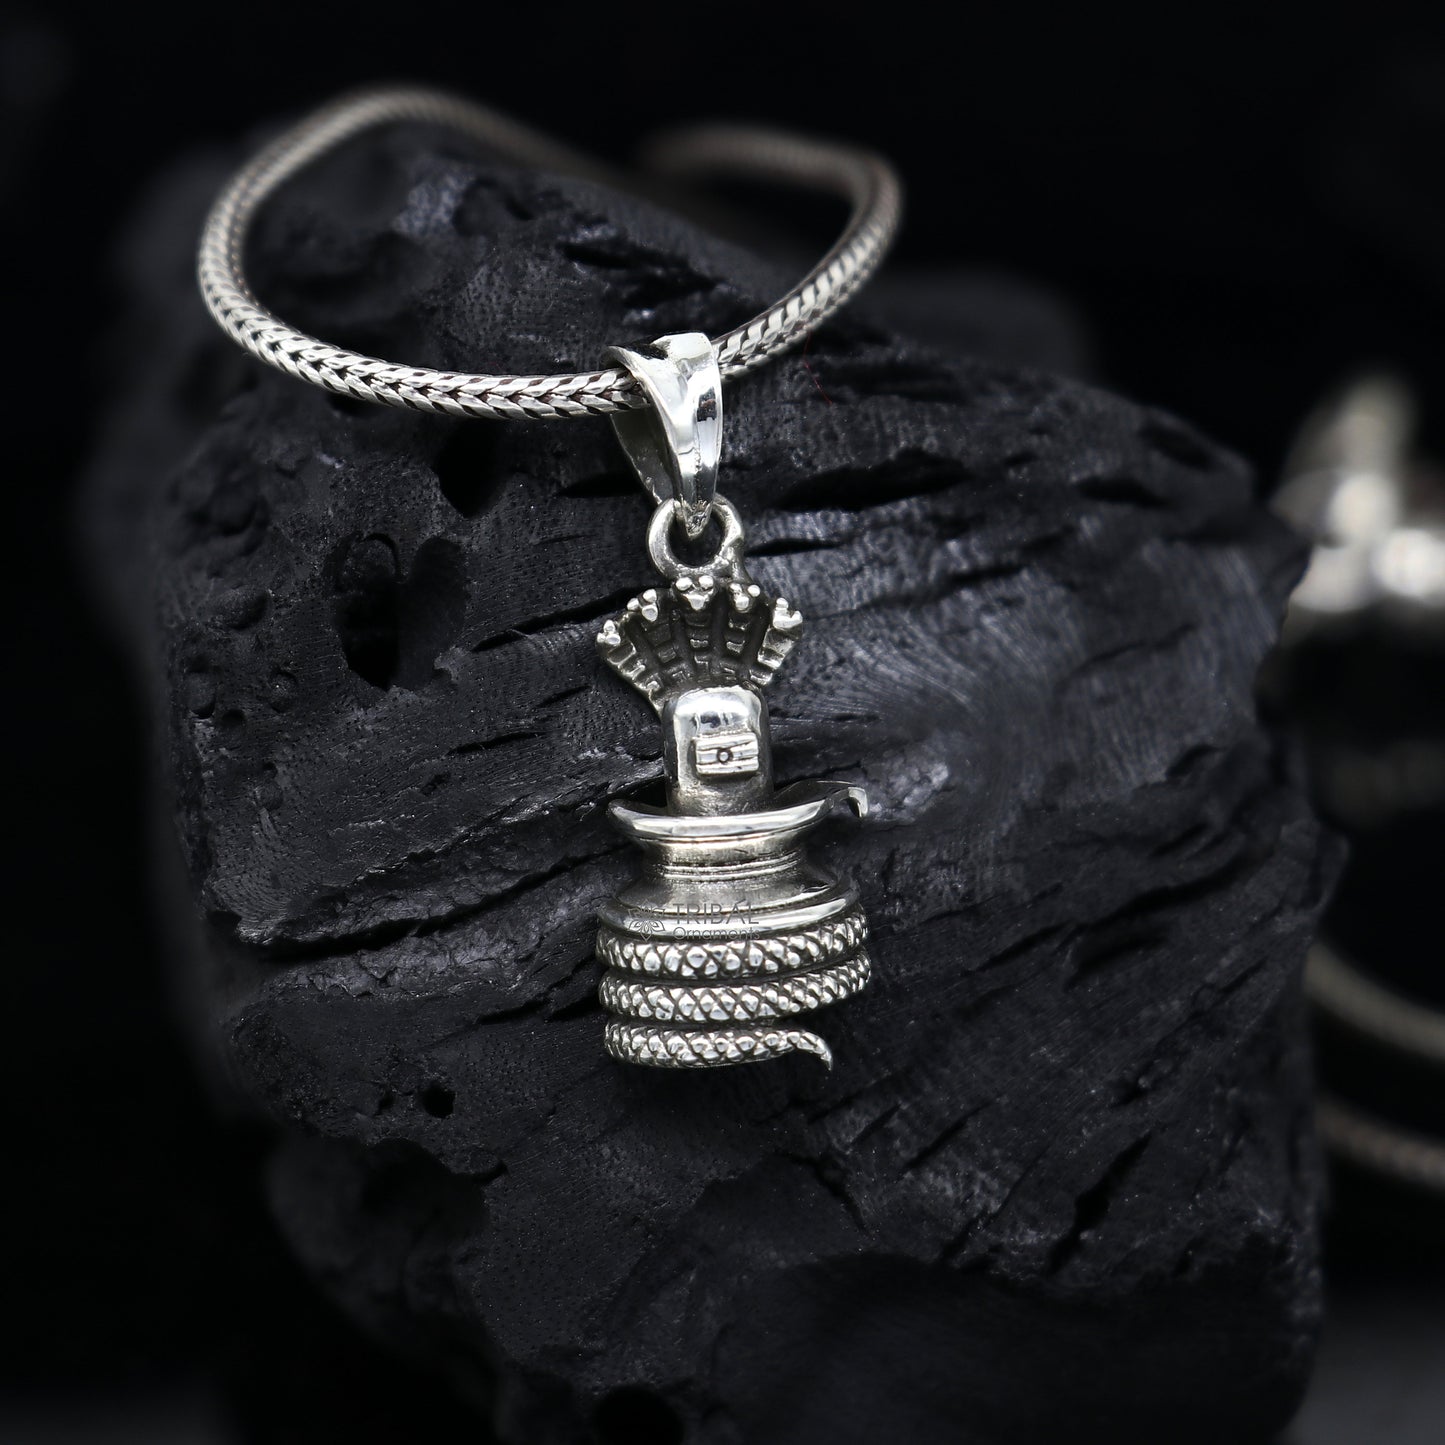 925 sterling silver divine Lord shiva lingam pendant, silver unique god pendant necklace jewelry nsp650 - TRIBAL ORNAMENTS